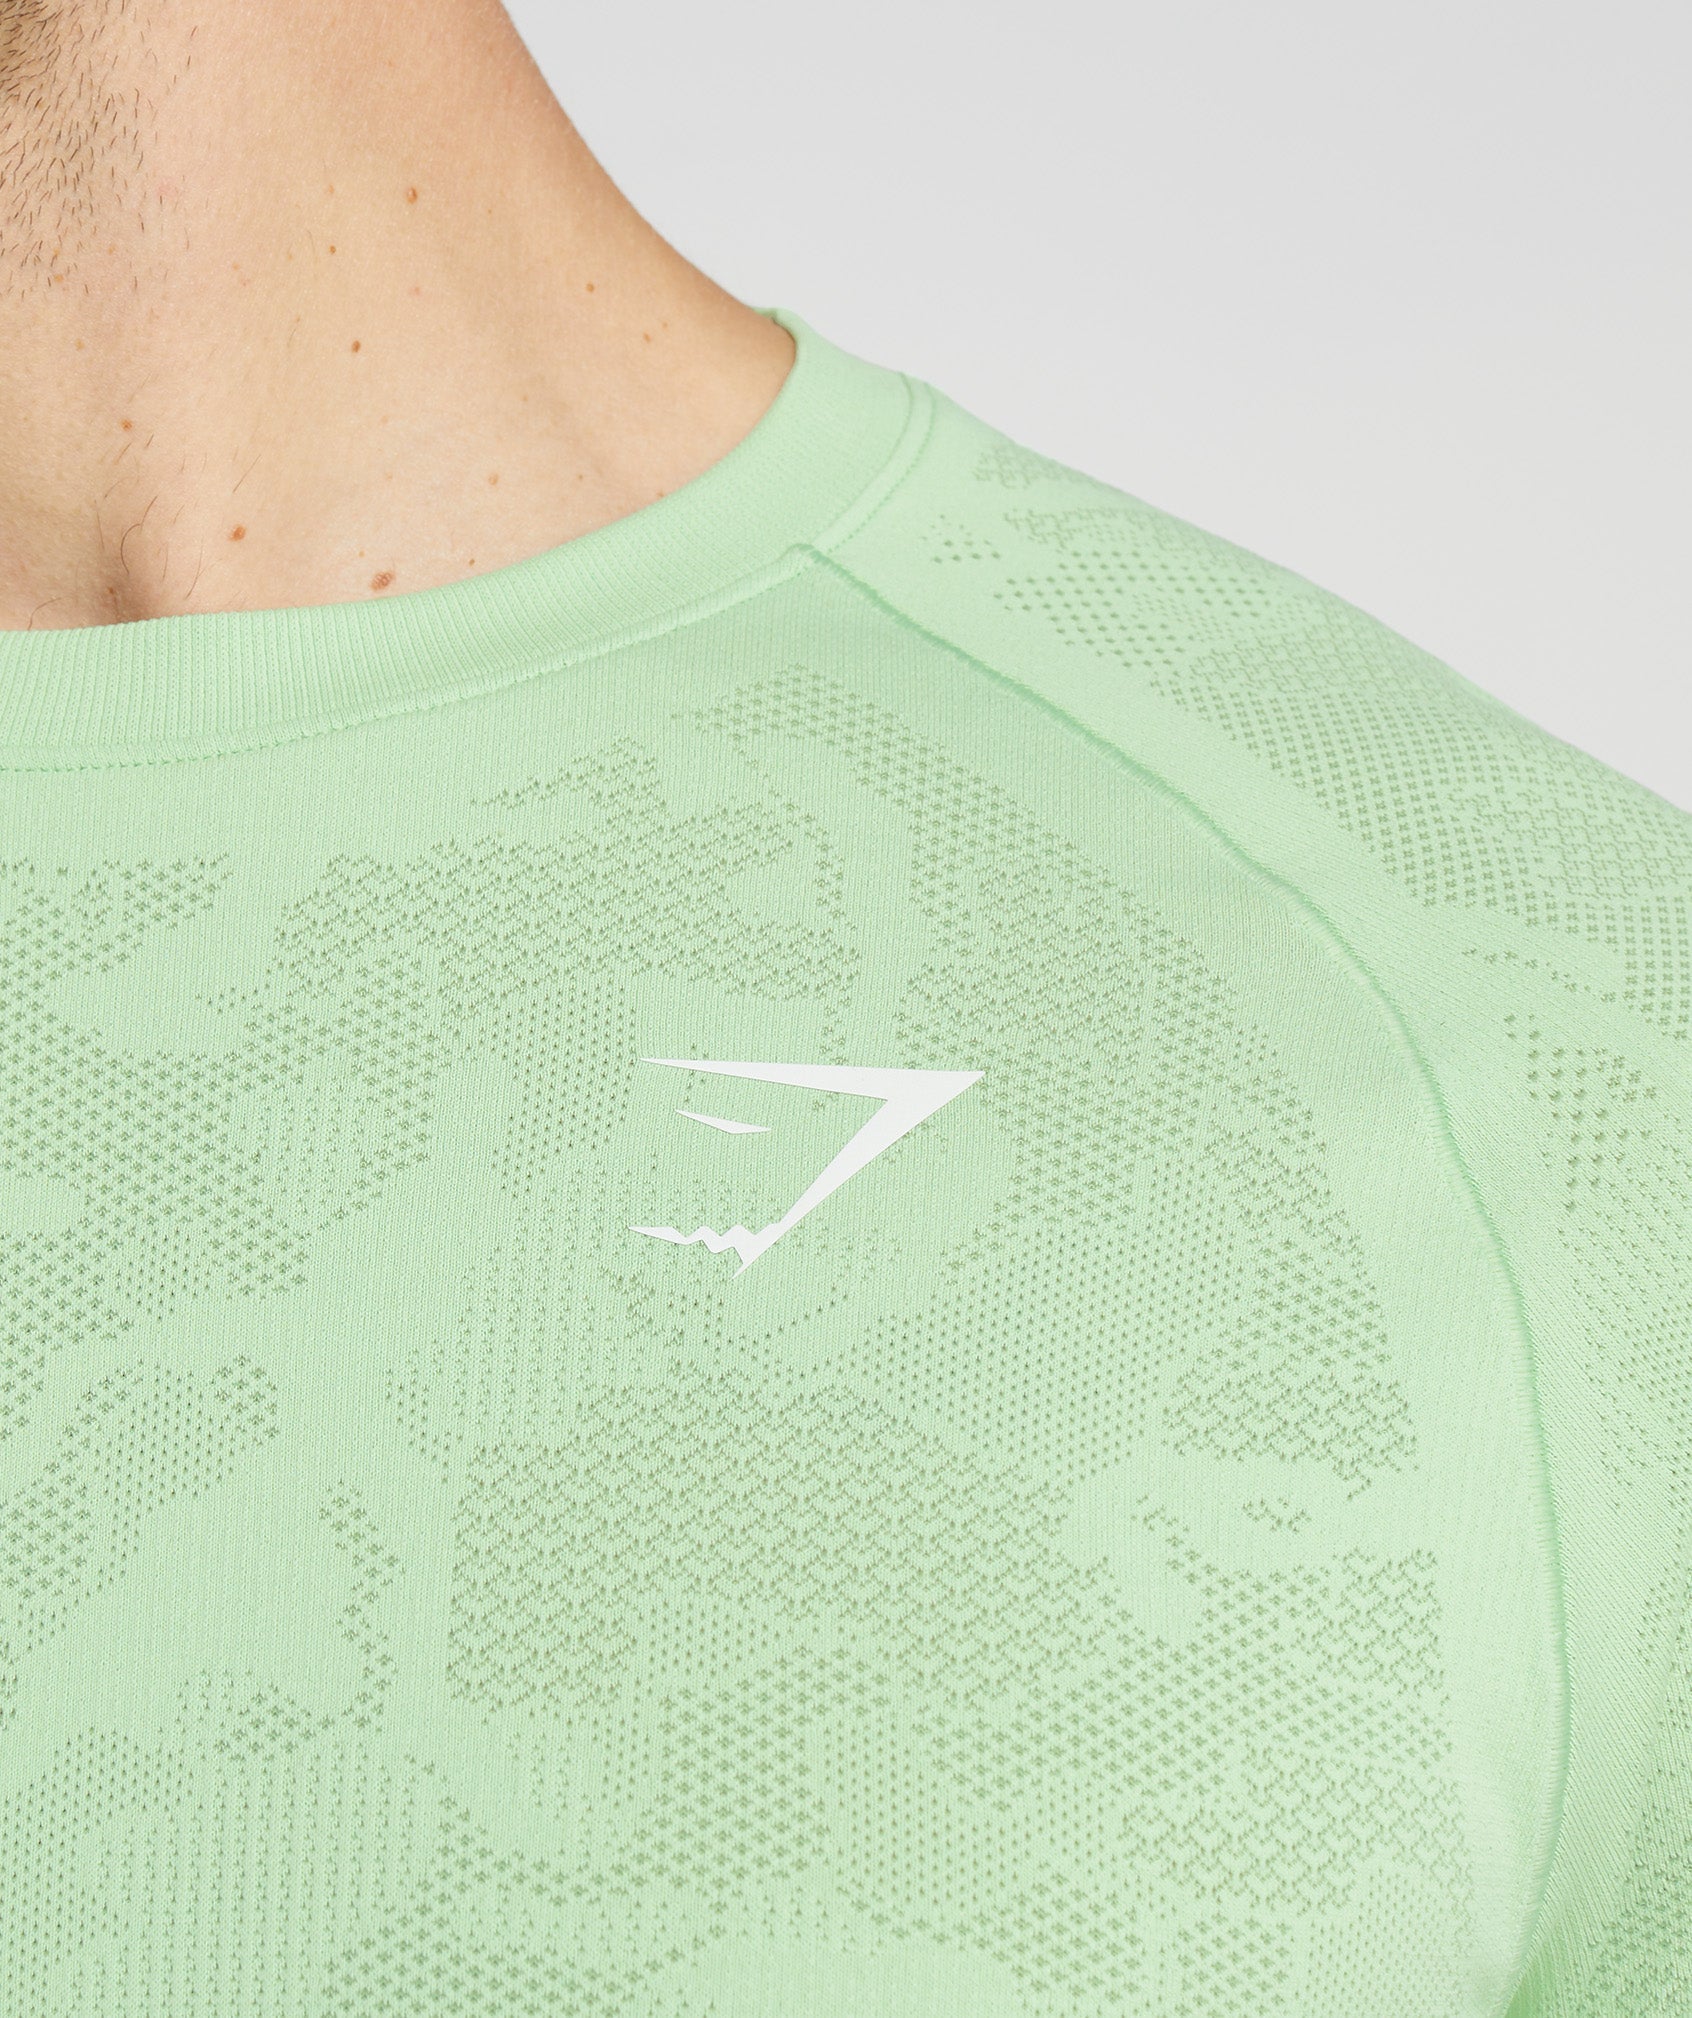 Geo Seamless T-Shirt in Aloe Green/Tea Green